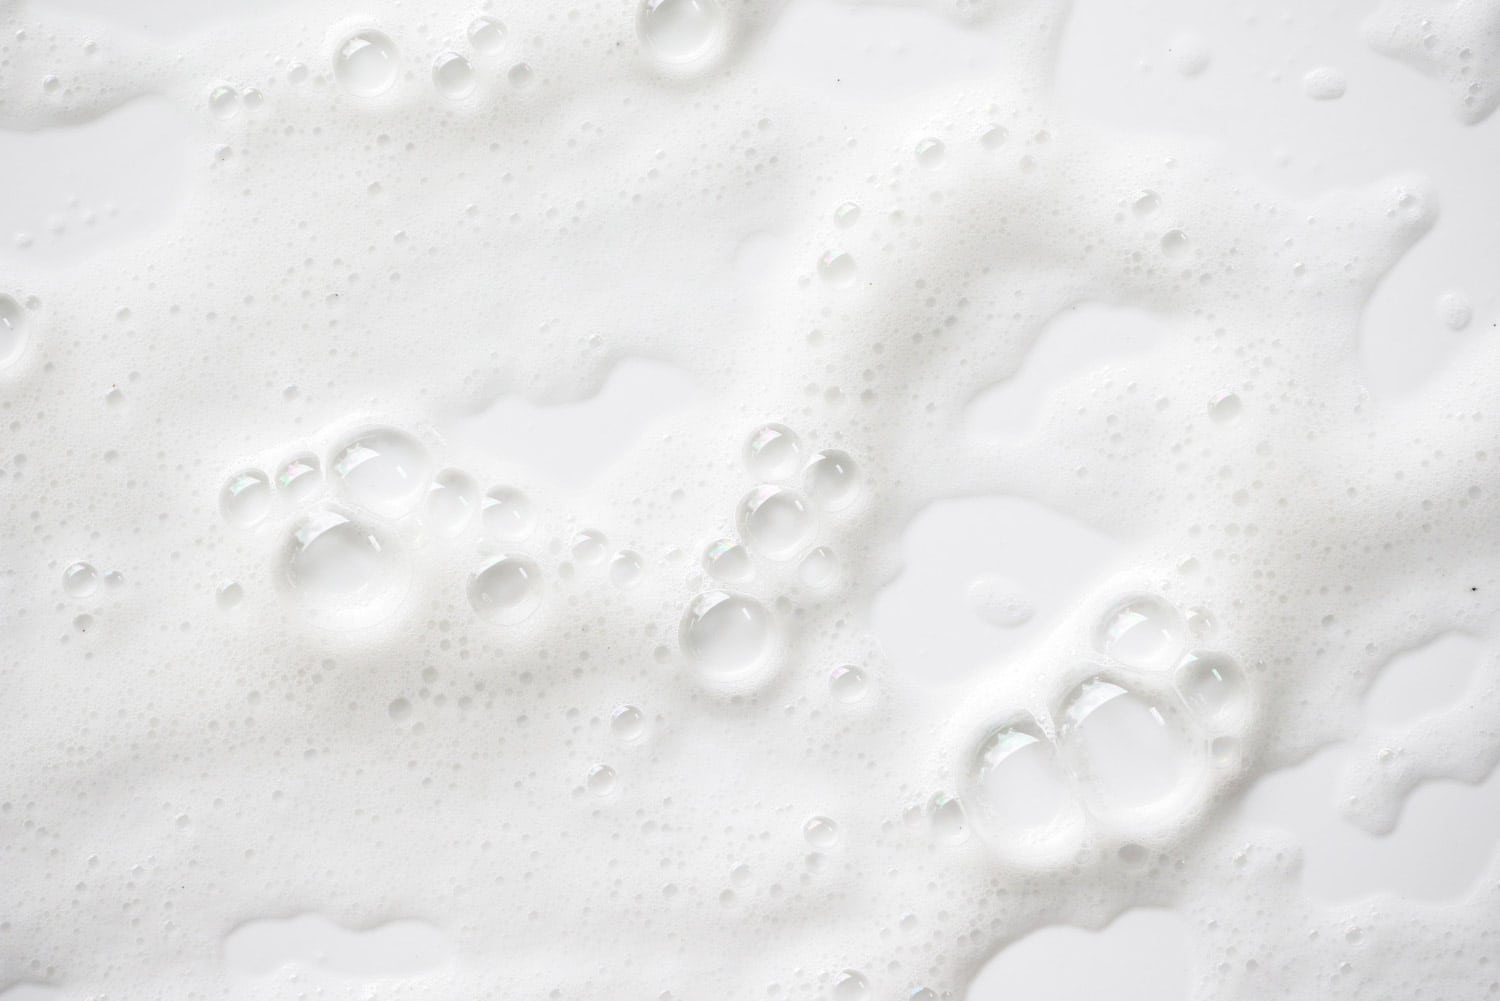 Image showing white foam